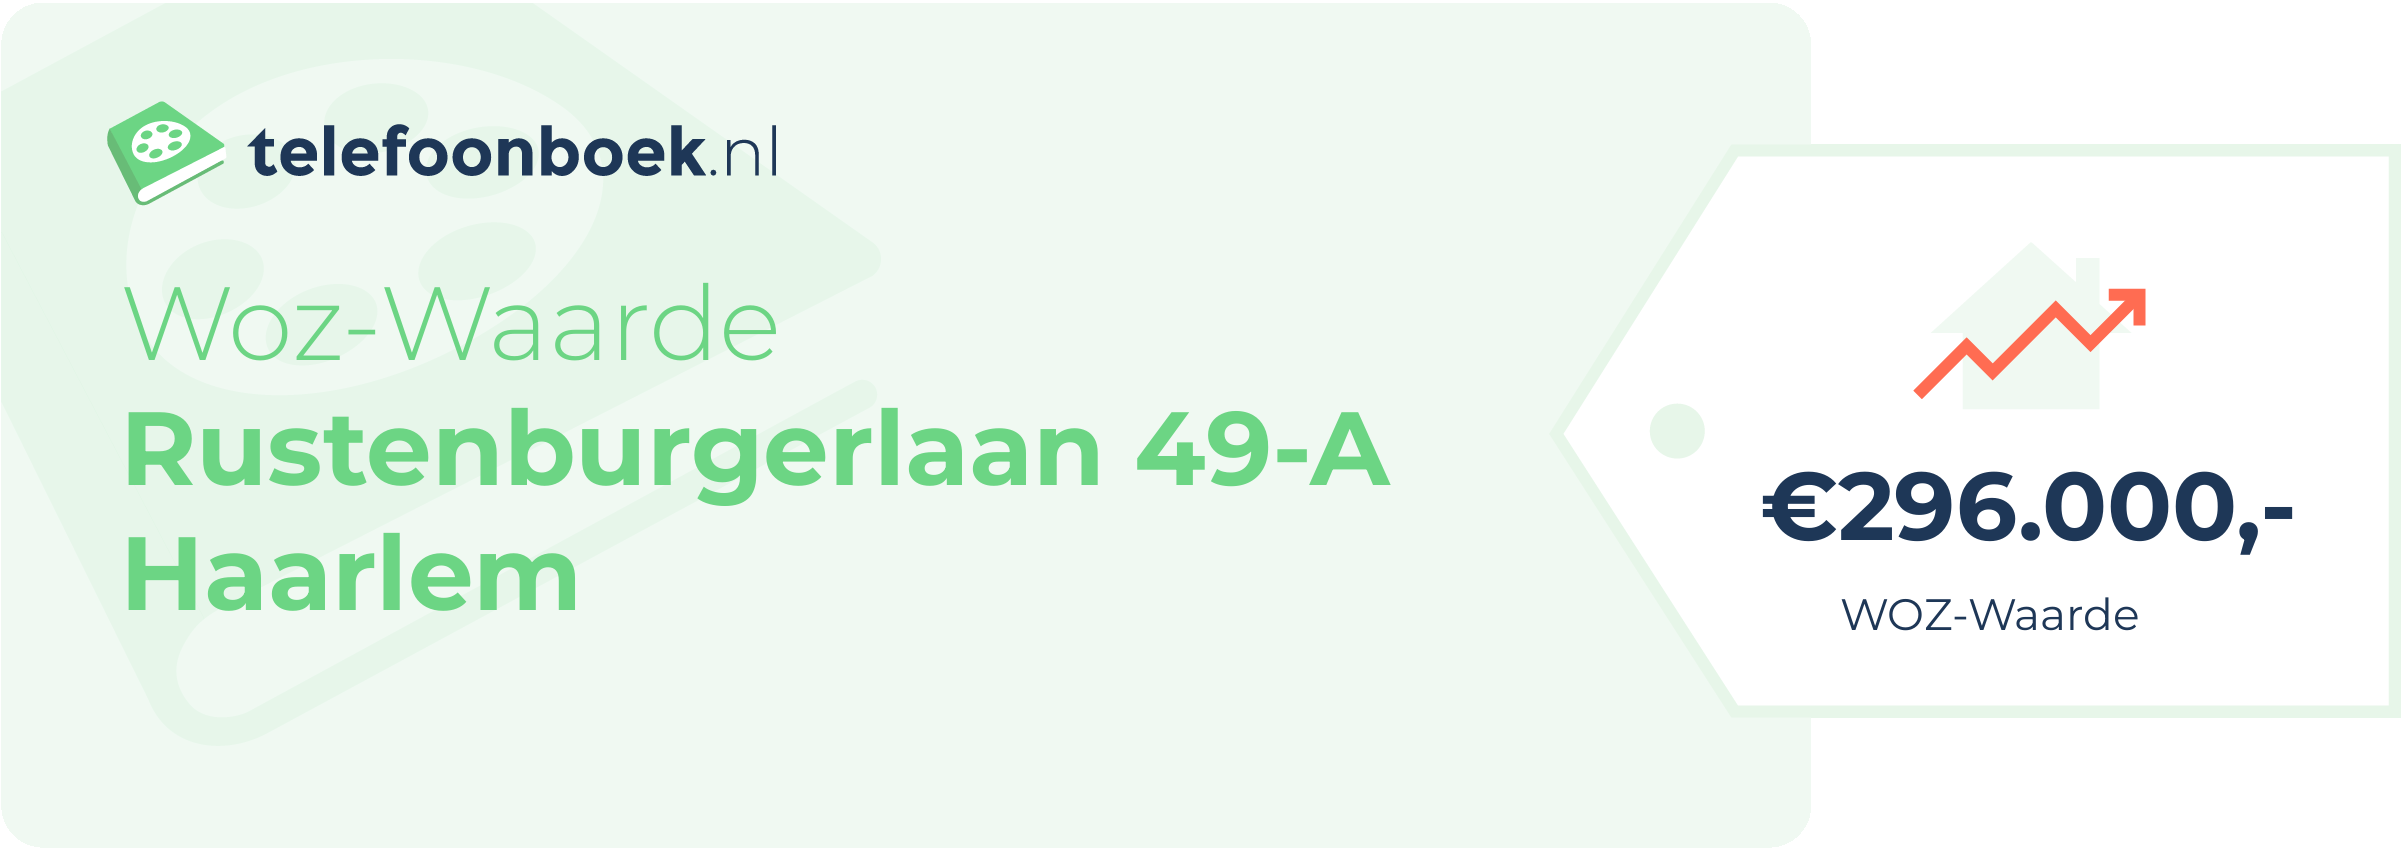 WOZ-waarde Rustenburgerlaan 49-A Haarlem